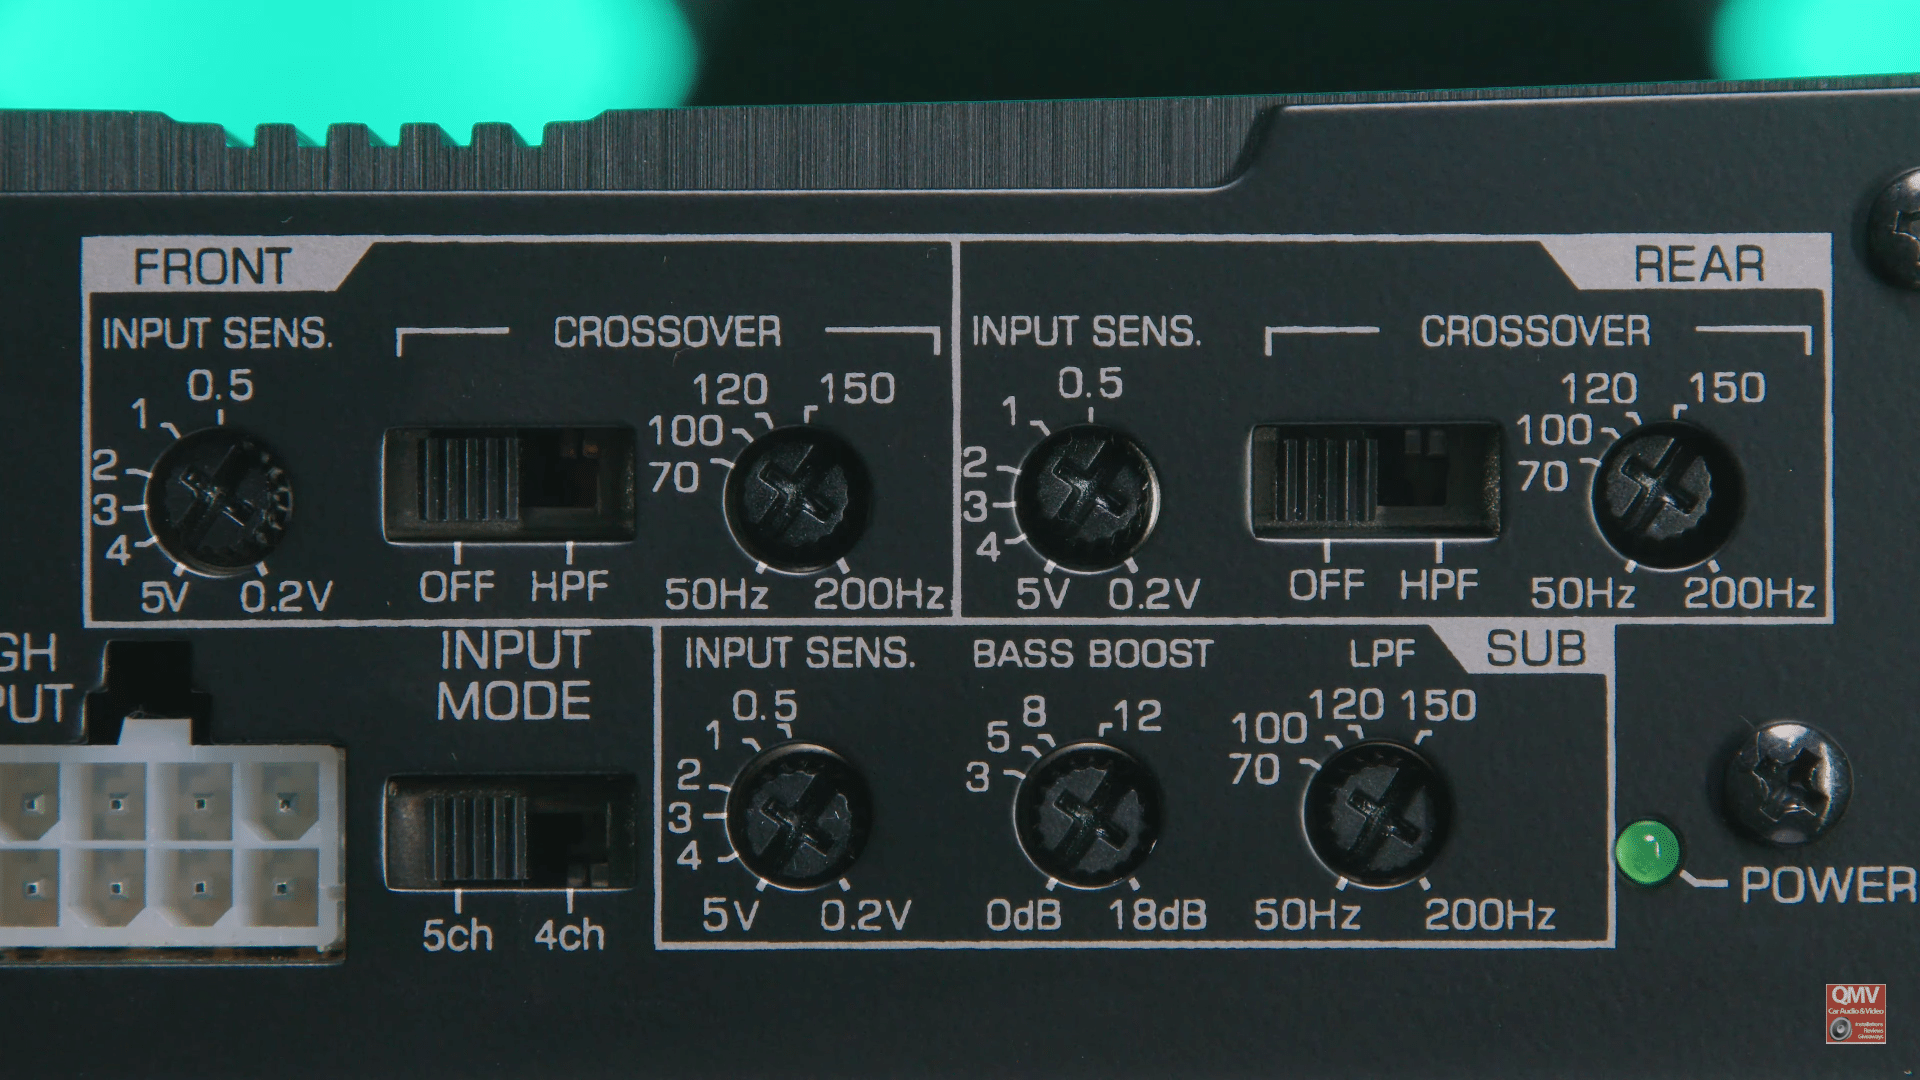 ports of the JVC KS-DR3005D receiver